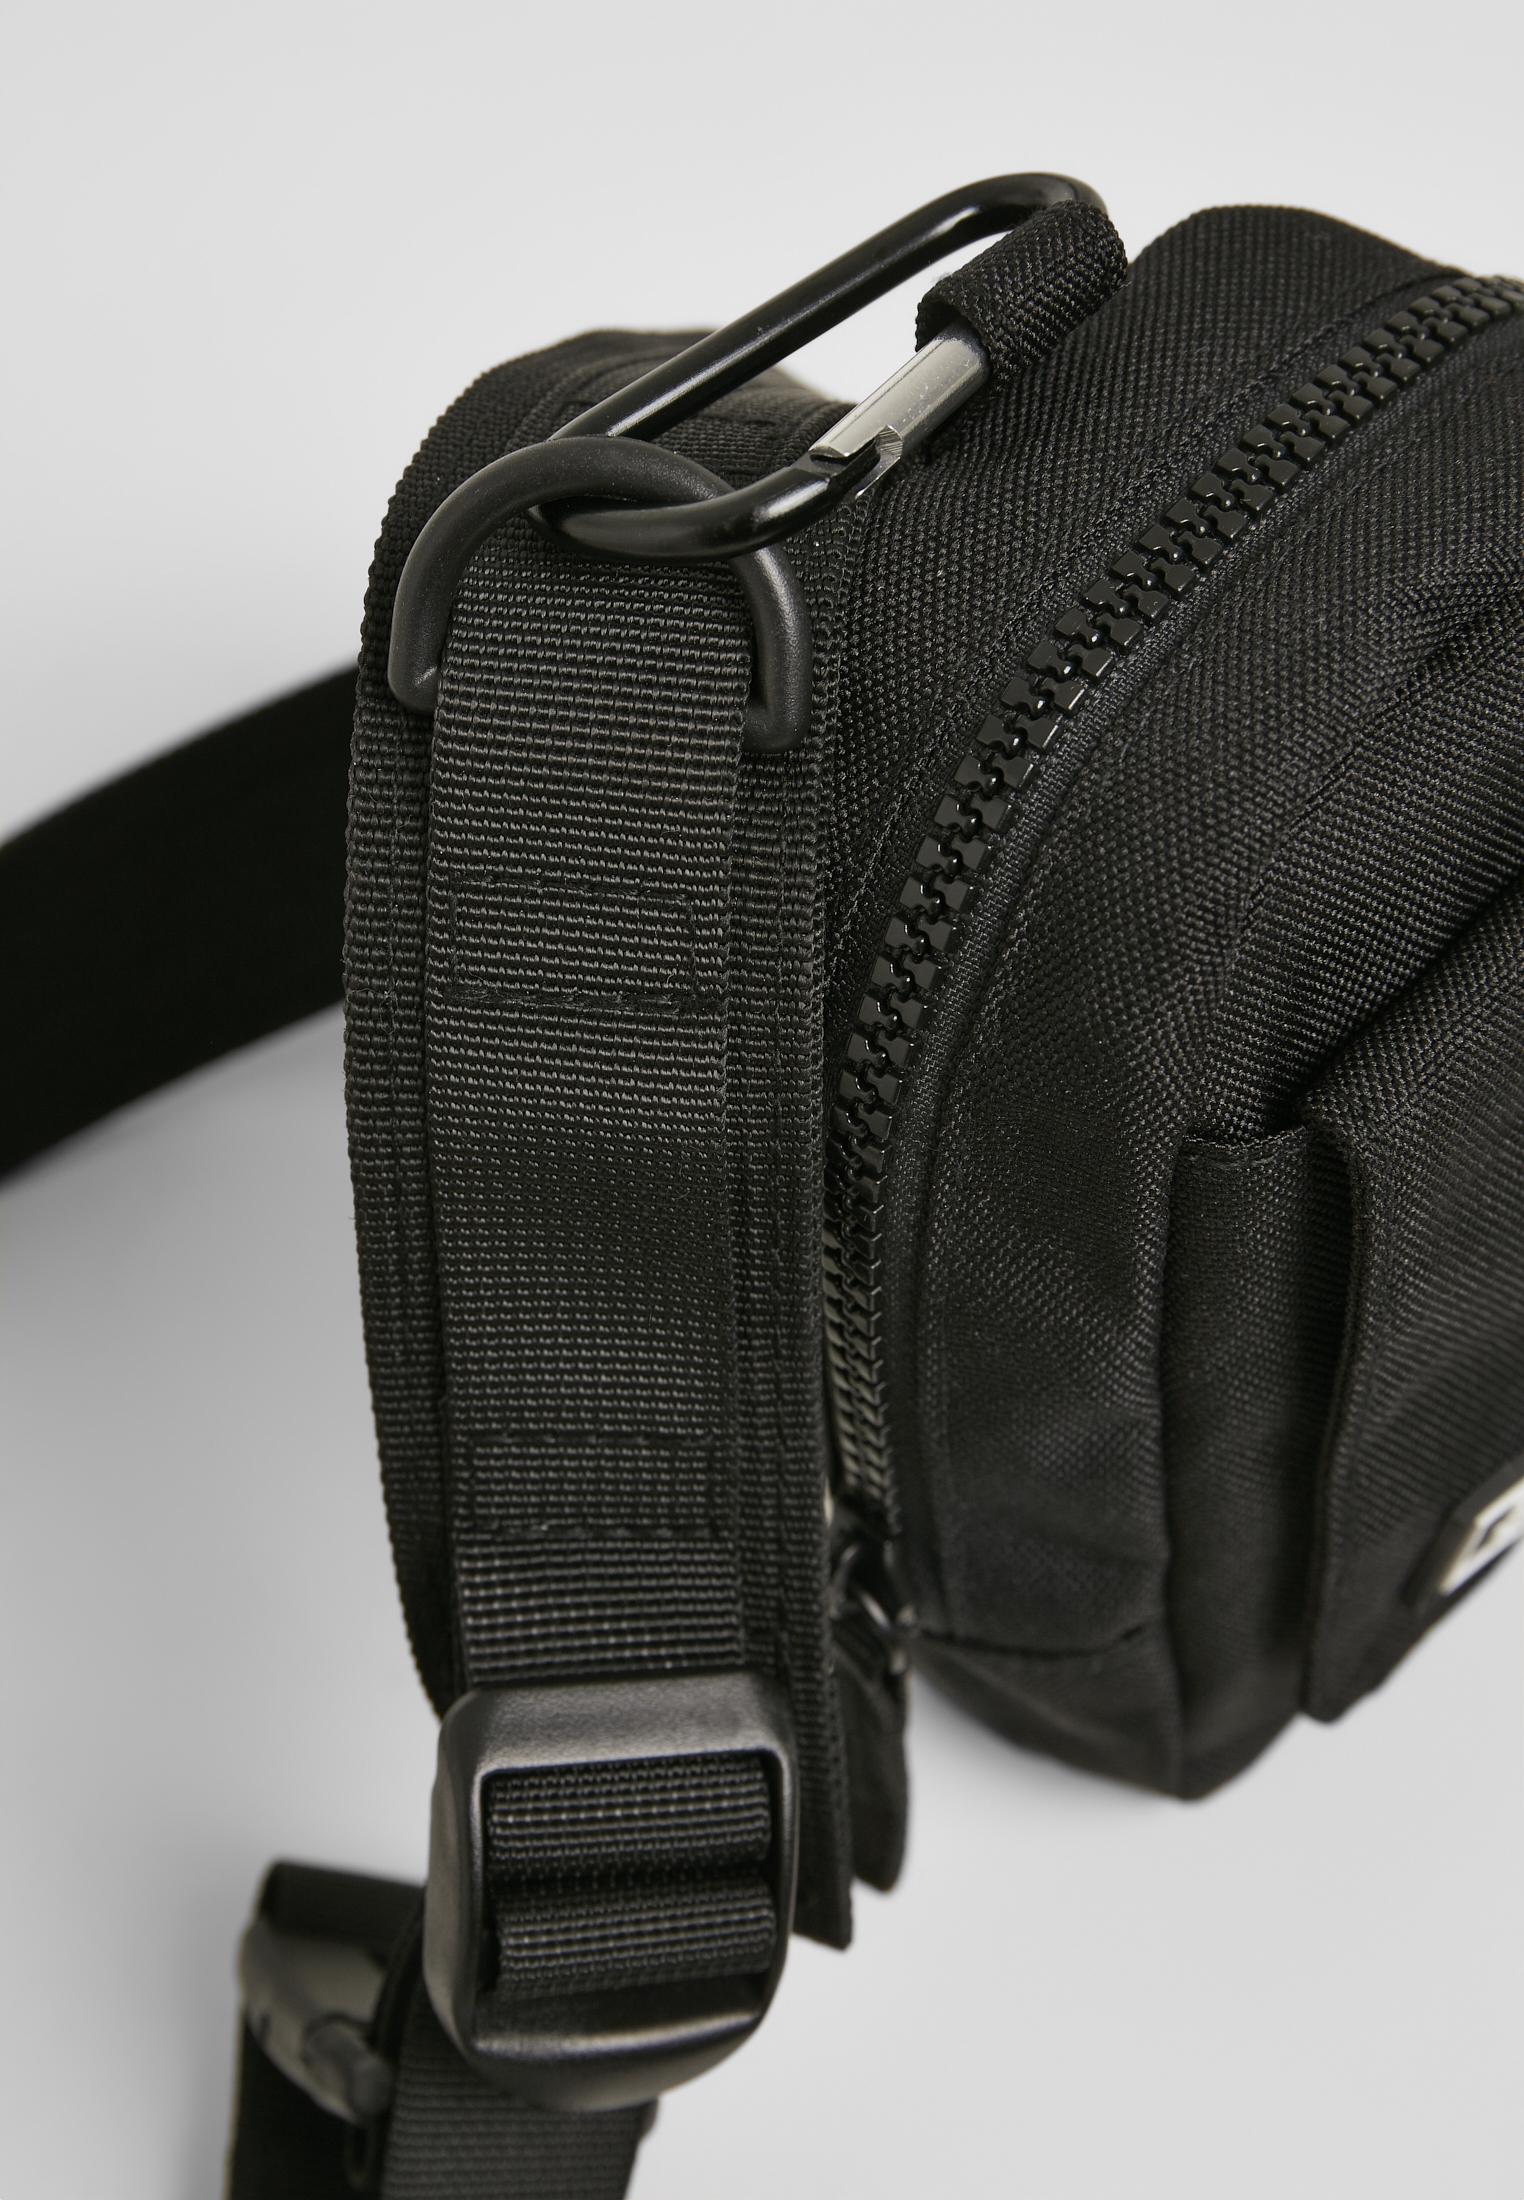 Taschen Utility Beltbag Casual in Farbe black